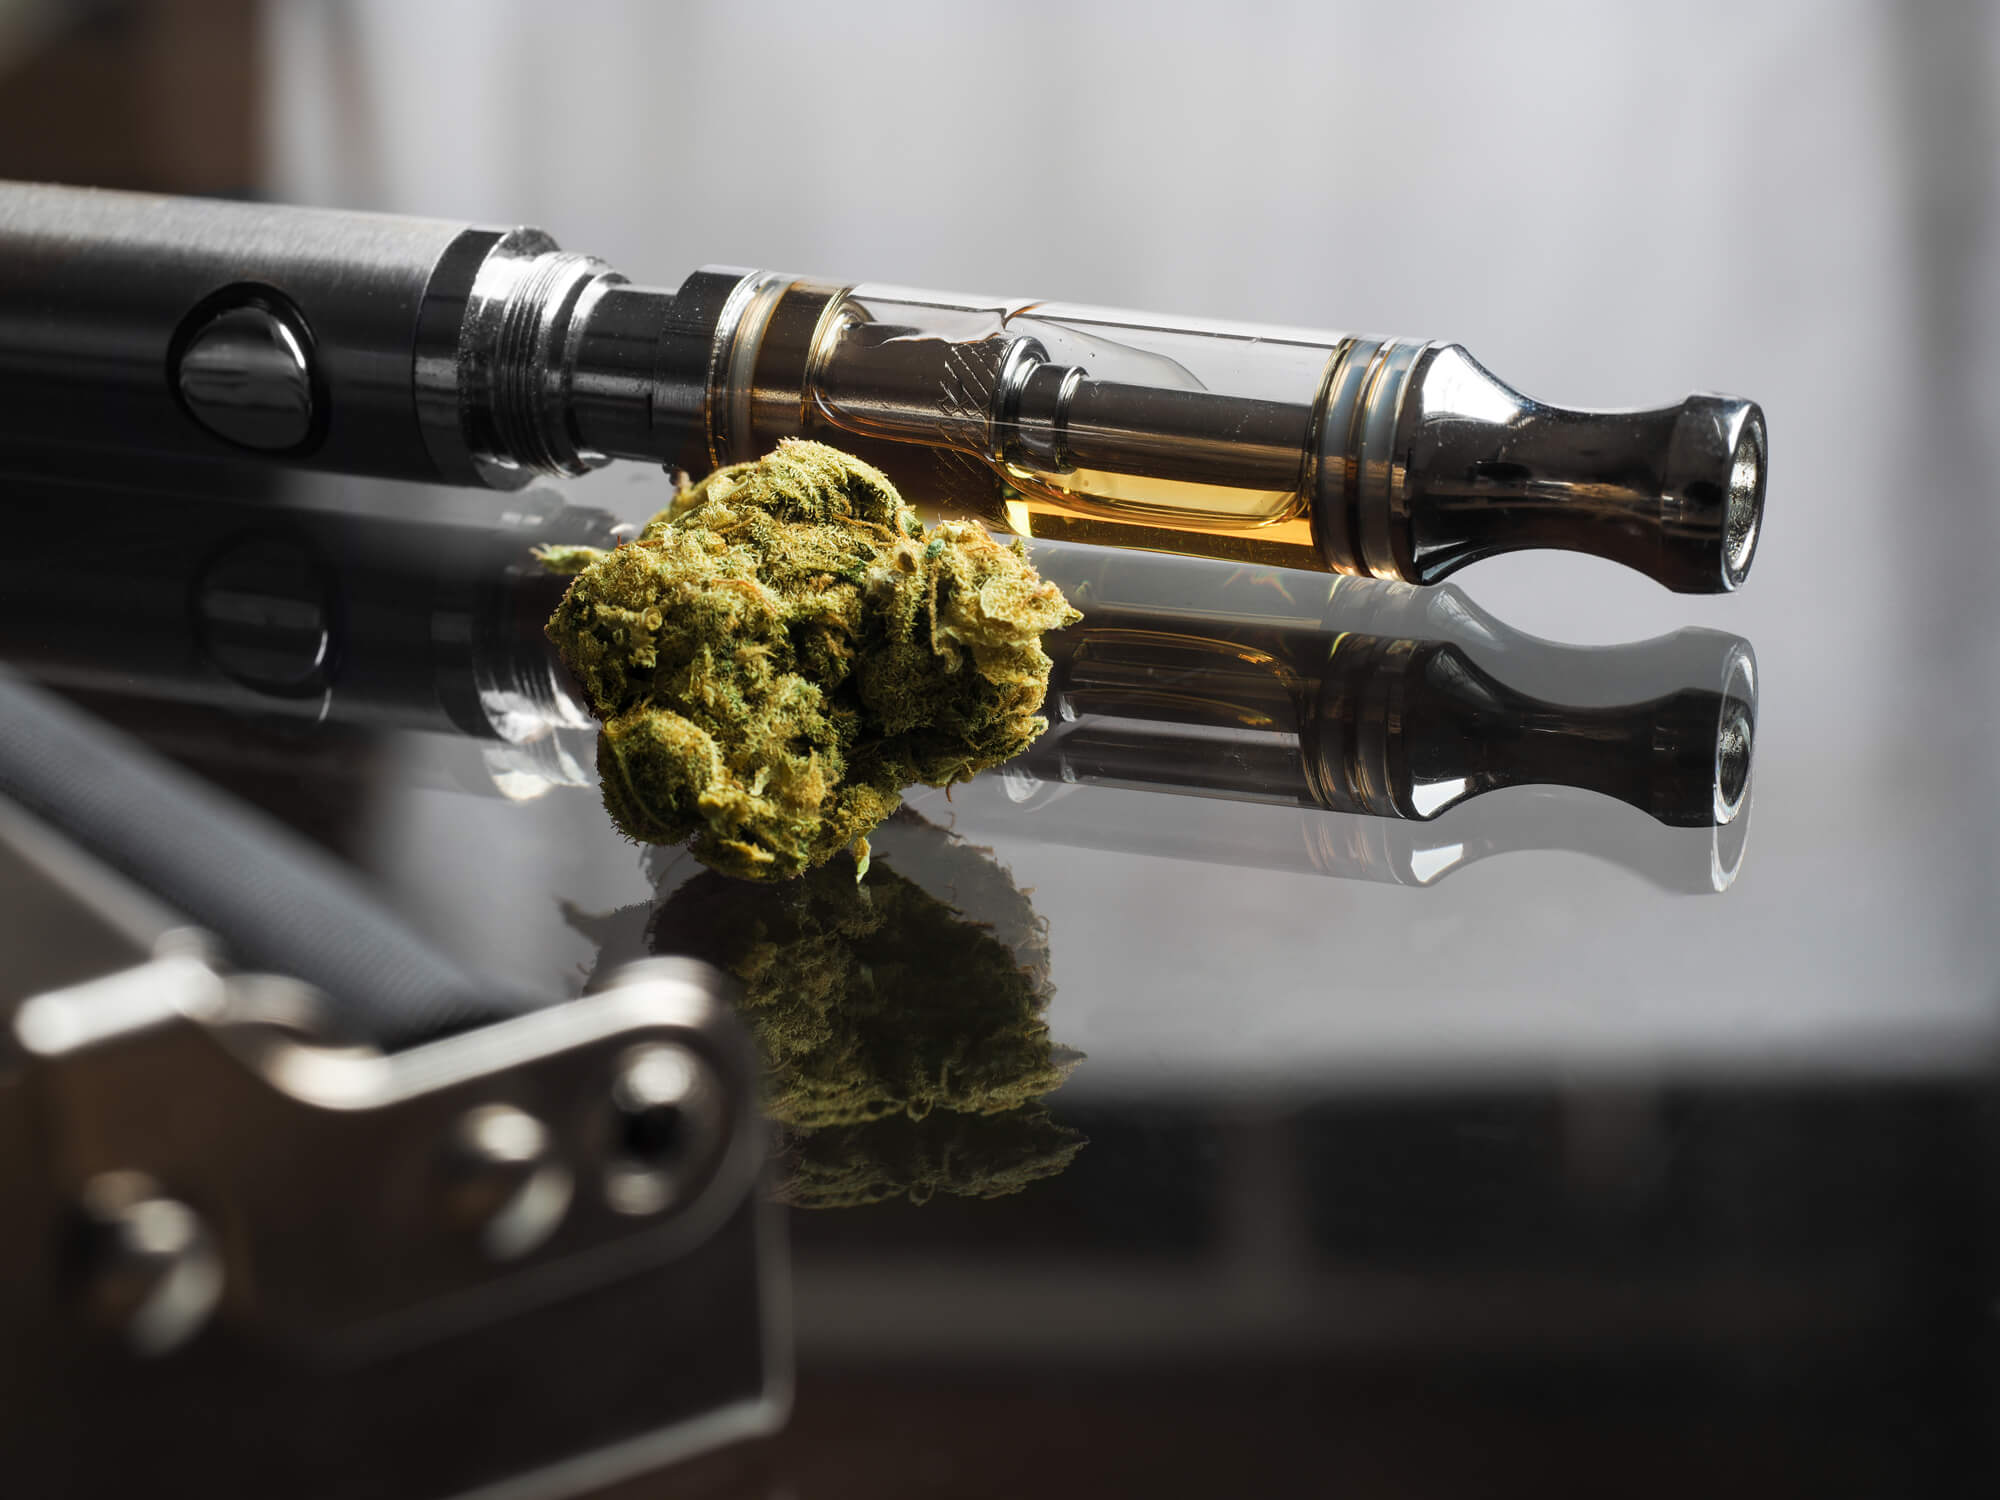 Cannabis oil vaporizer and marijuana bud